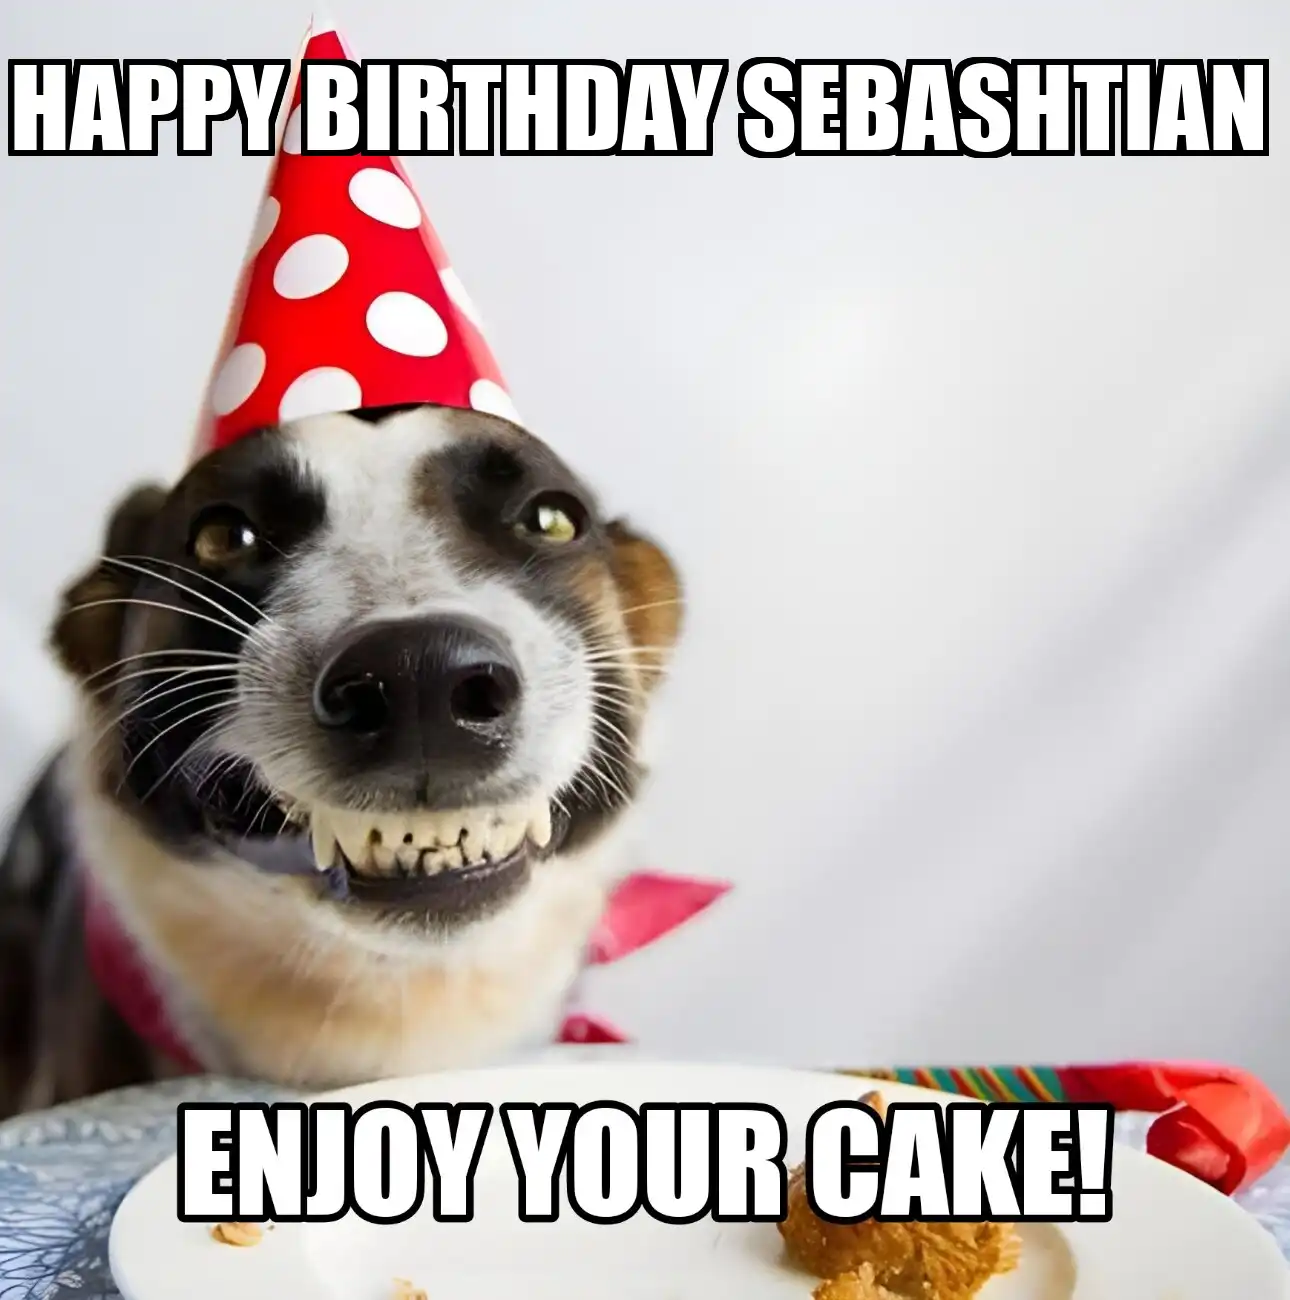 Happy Birthday Sebashtian Enjoy Your Cake Dog Meme